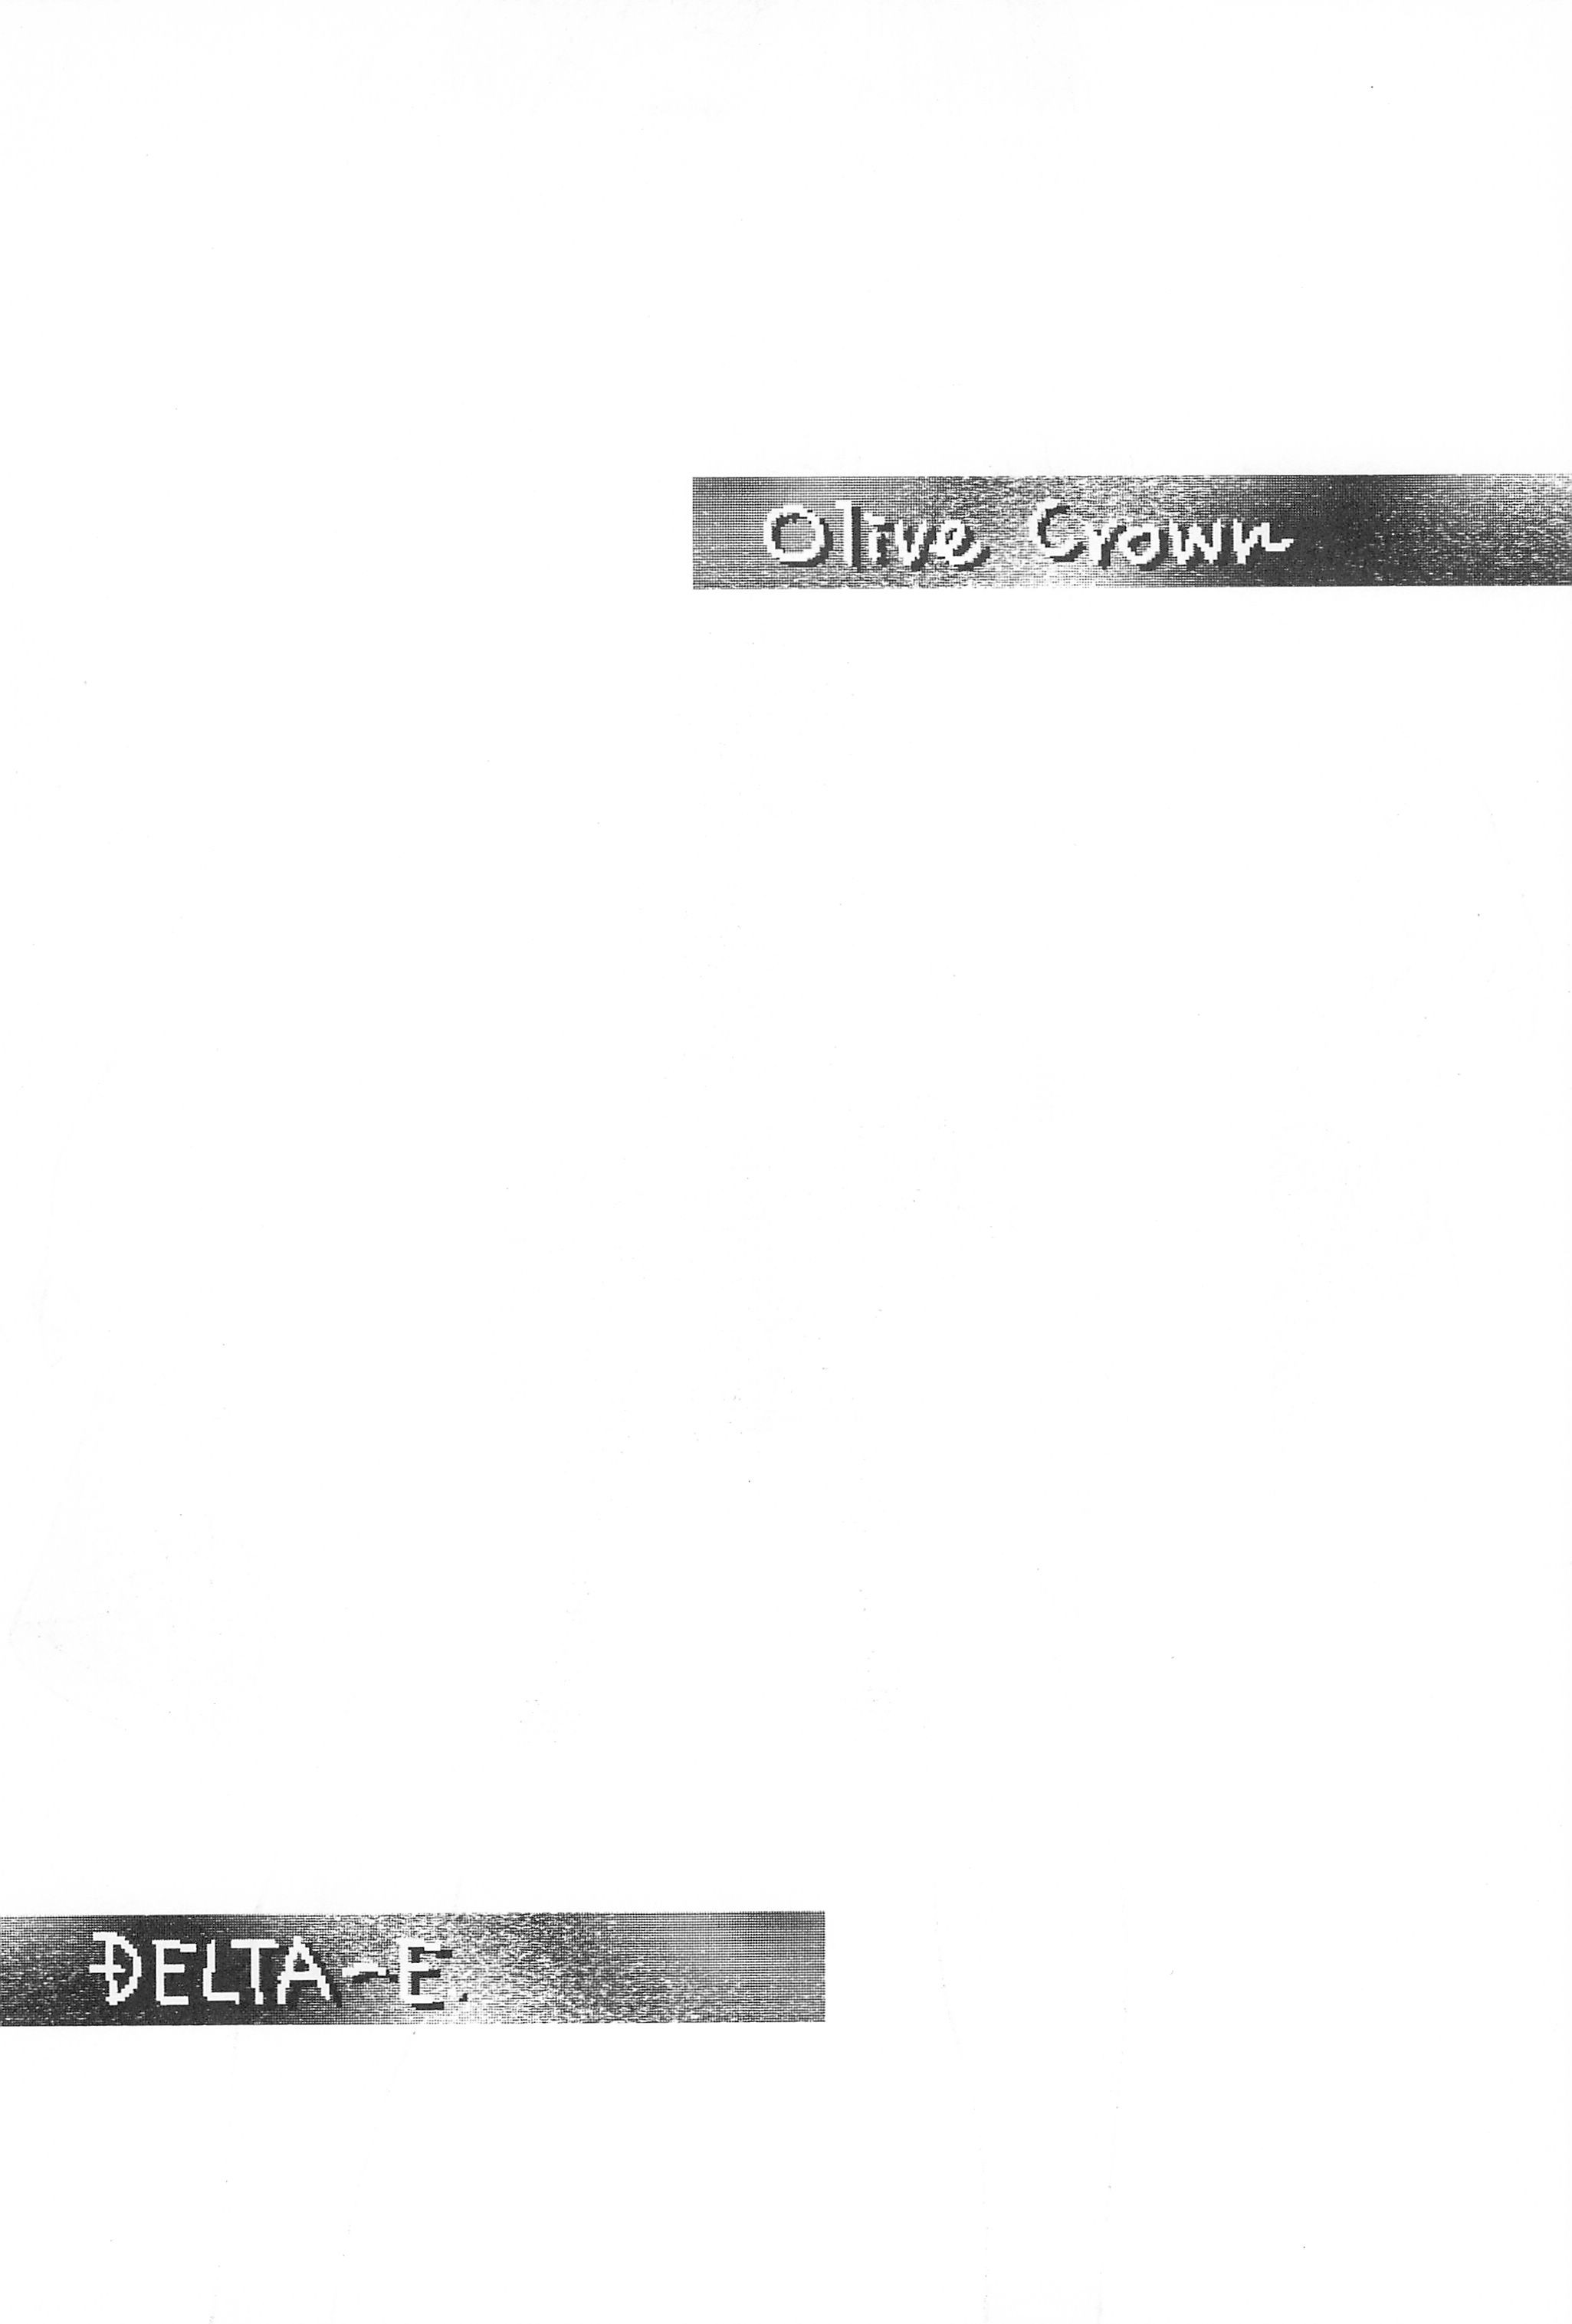 (C58) [PIROPIRO (DELTA-E.)] Olive Crown (カードキャプターさくら)